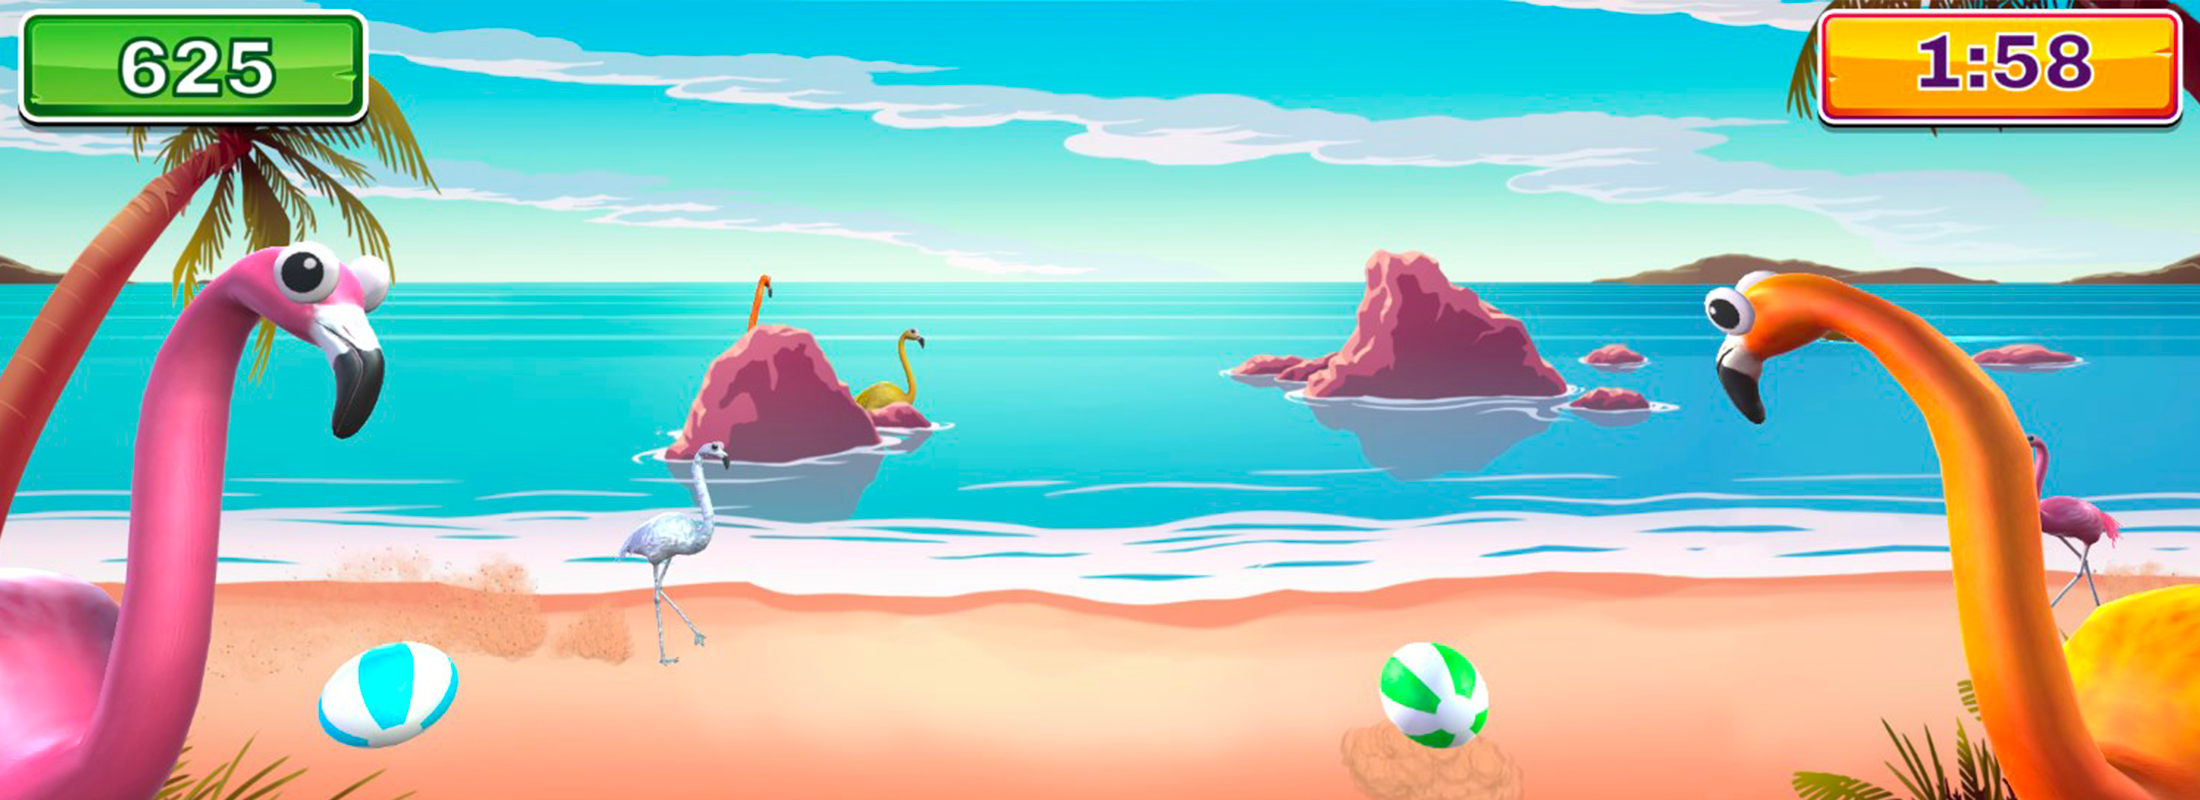 Disco Flamingo gameplay picture 1